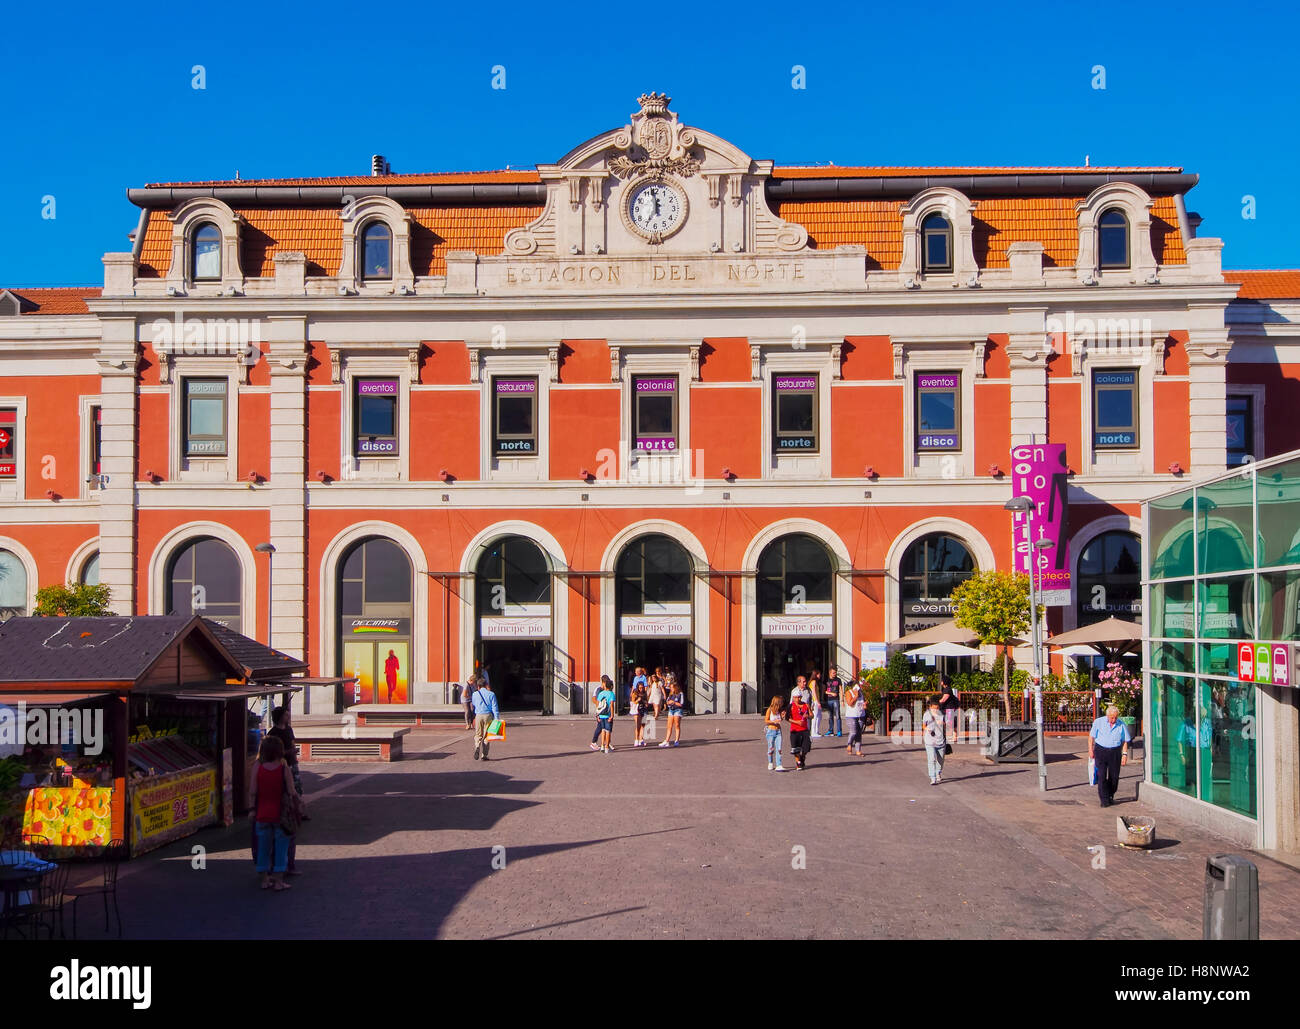 Spain, Madrid, View of the Estacion del Norte, now Principe Pio train Station and Shopping Center. Stock Photo